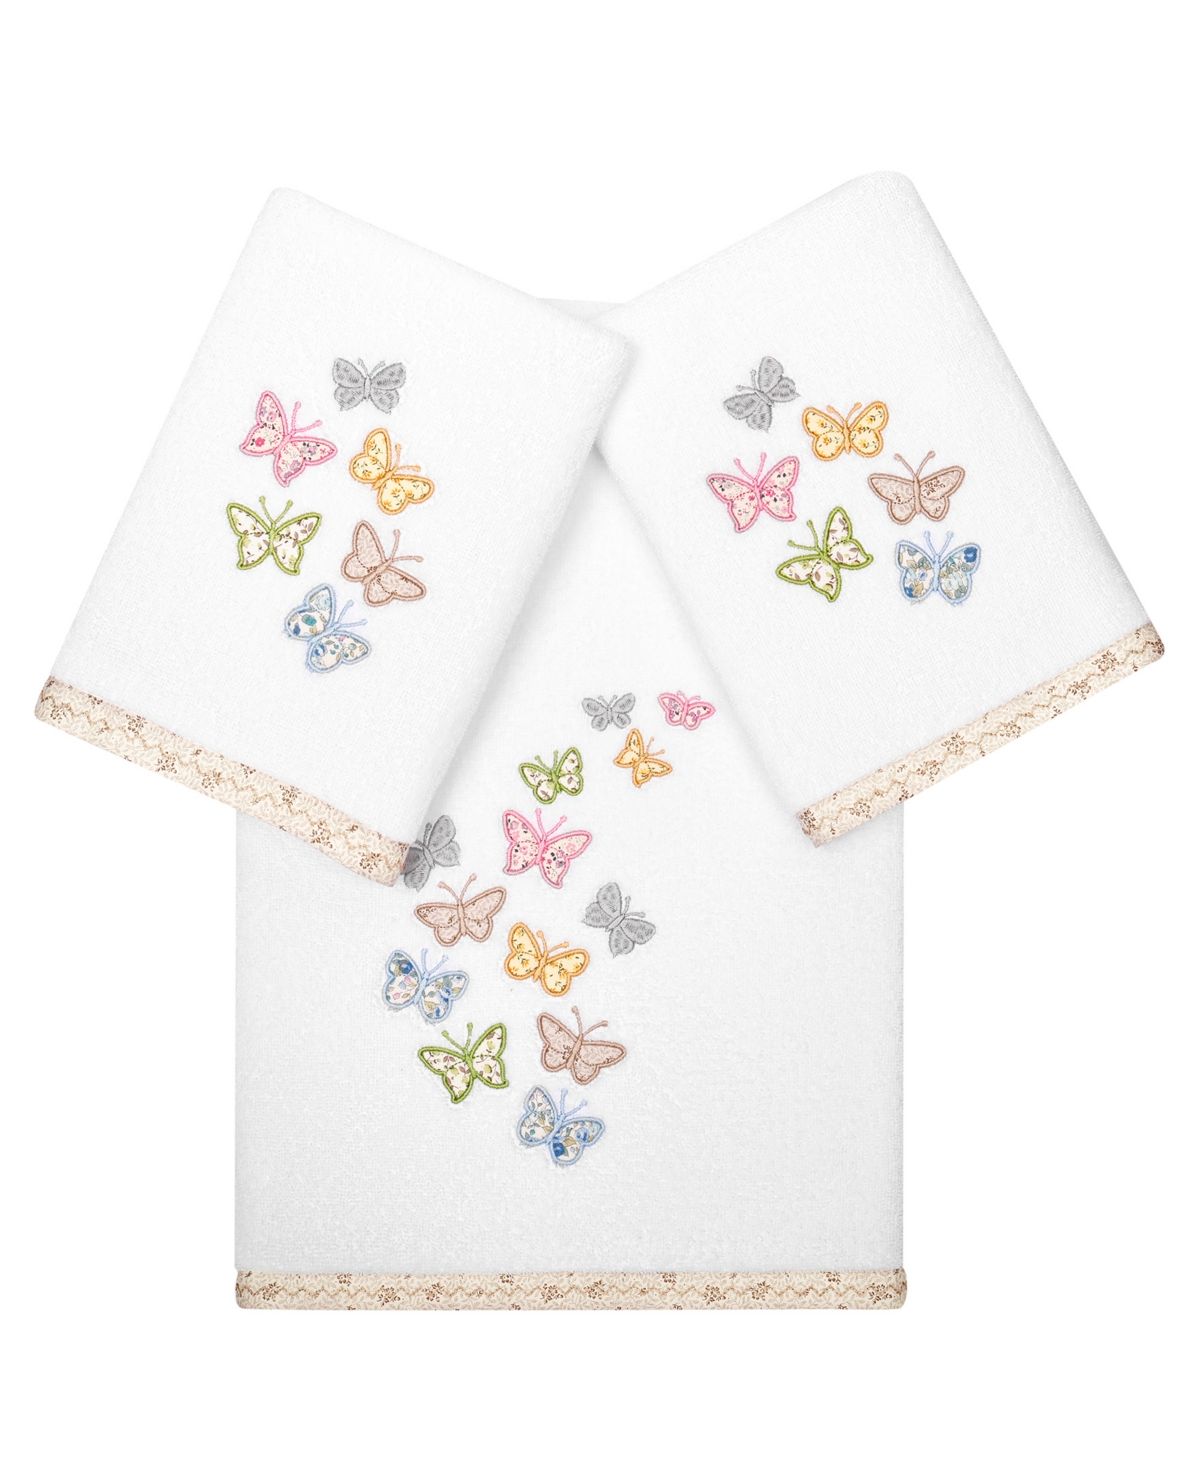 Linum Home Textiles Turkish Cotton Mariposa Embellished Towel Set, 3 Piece In White